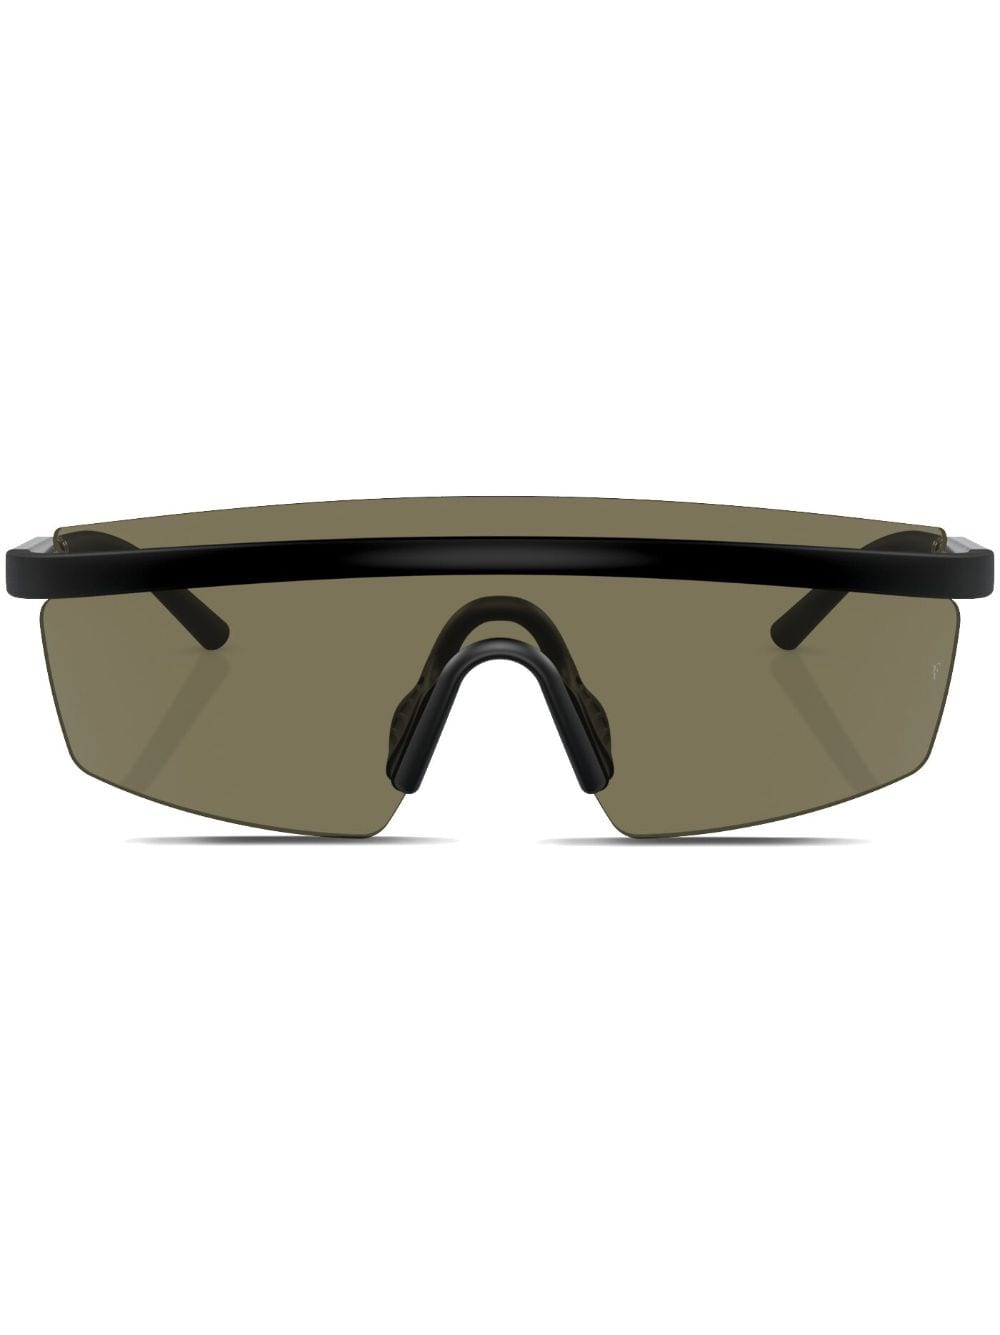 R-4 mask-frame sunglasses